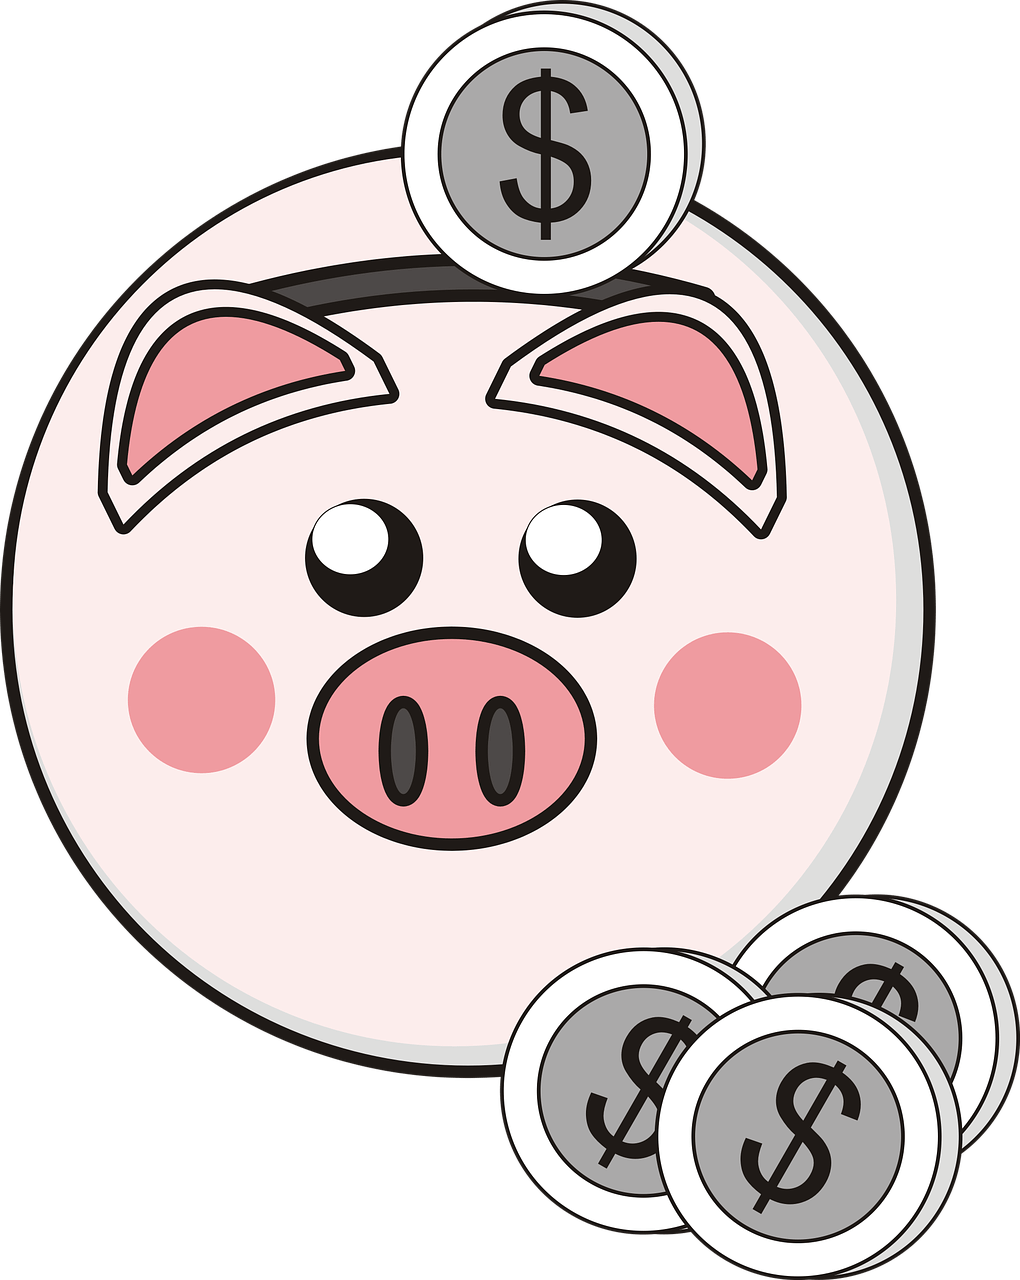 Coin clipart cartoon. Piggy bank with dollar